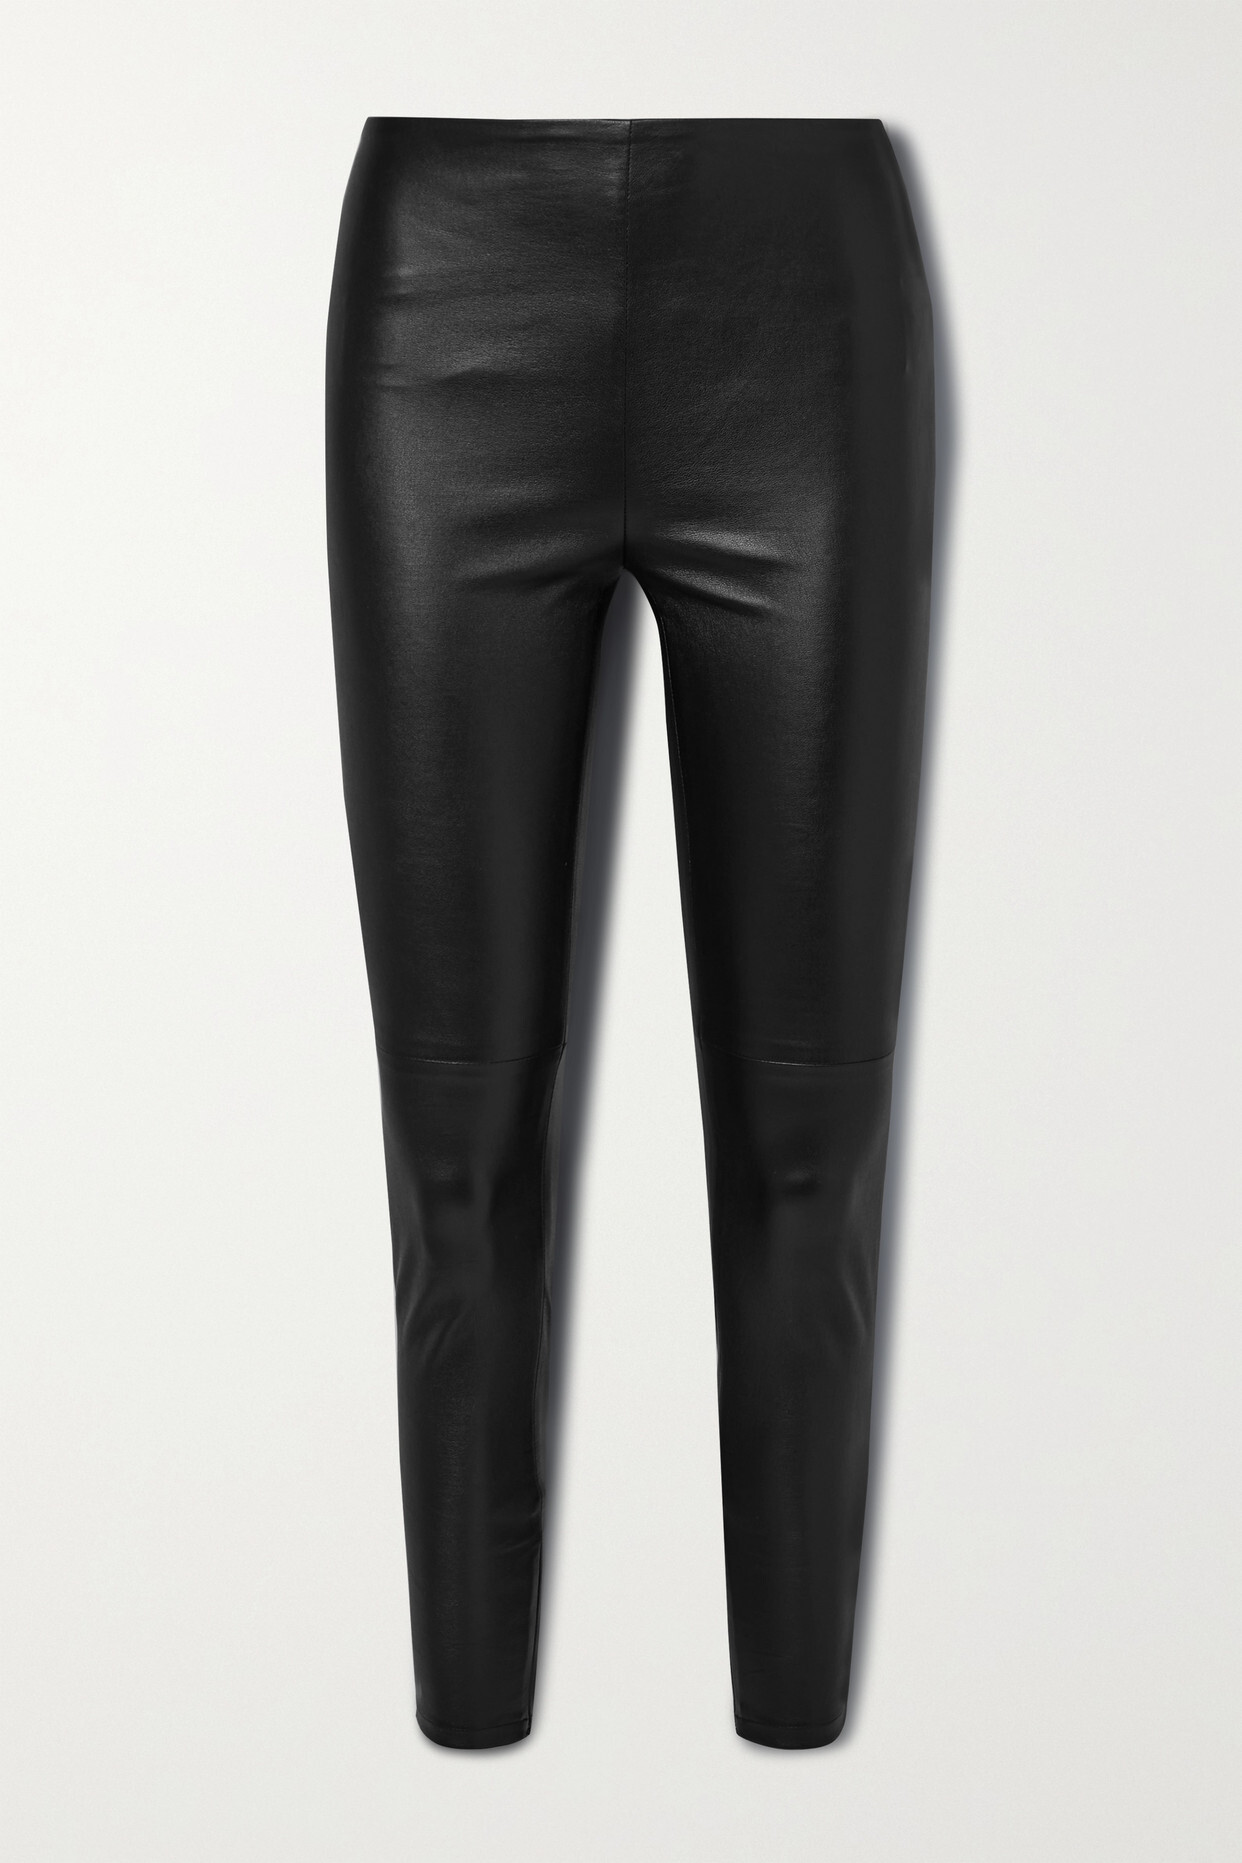 Ralph Lauren Collection - Eleanora Stretch-leather Leggings - Black